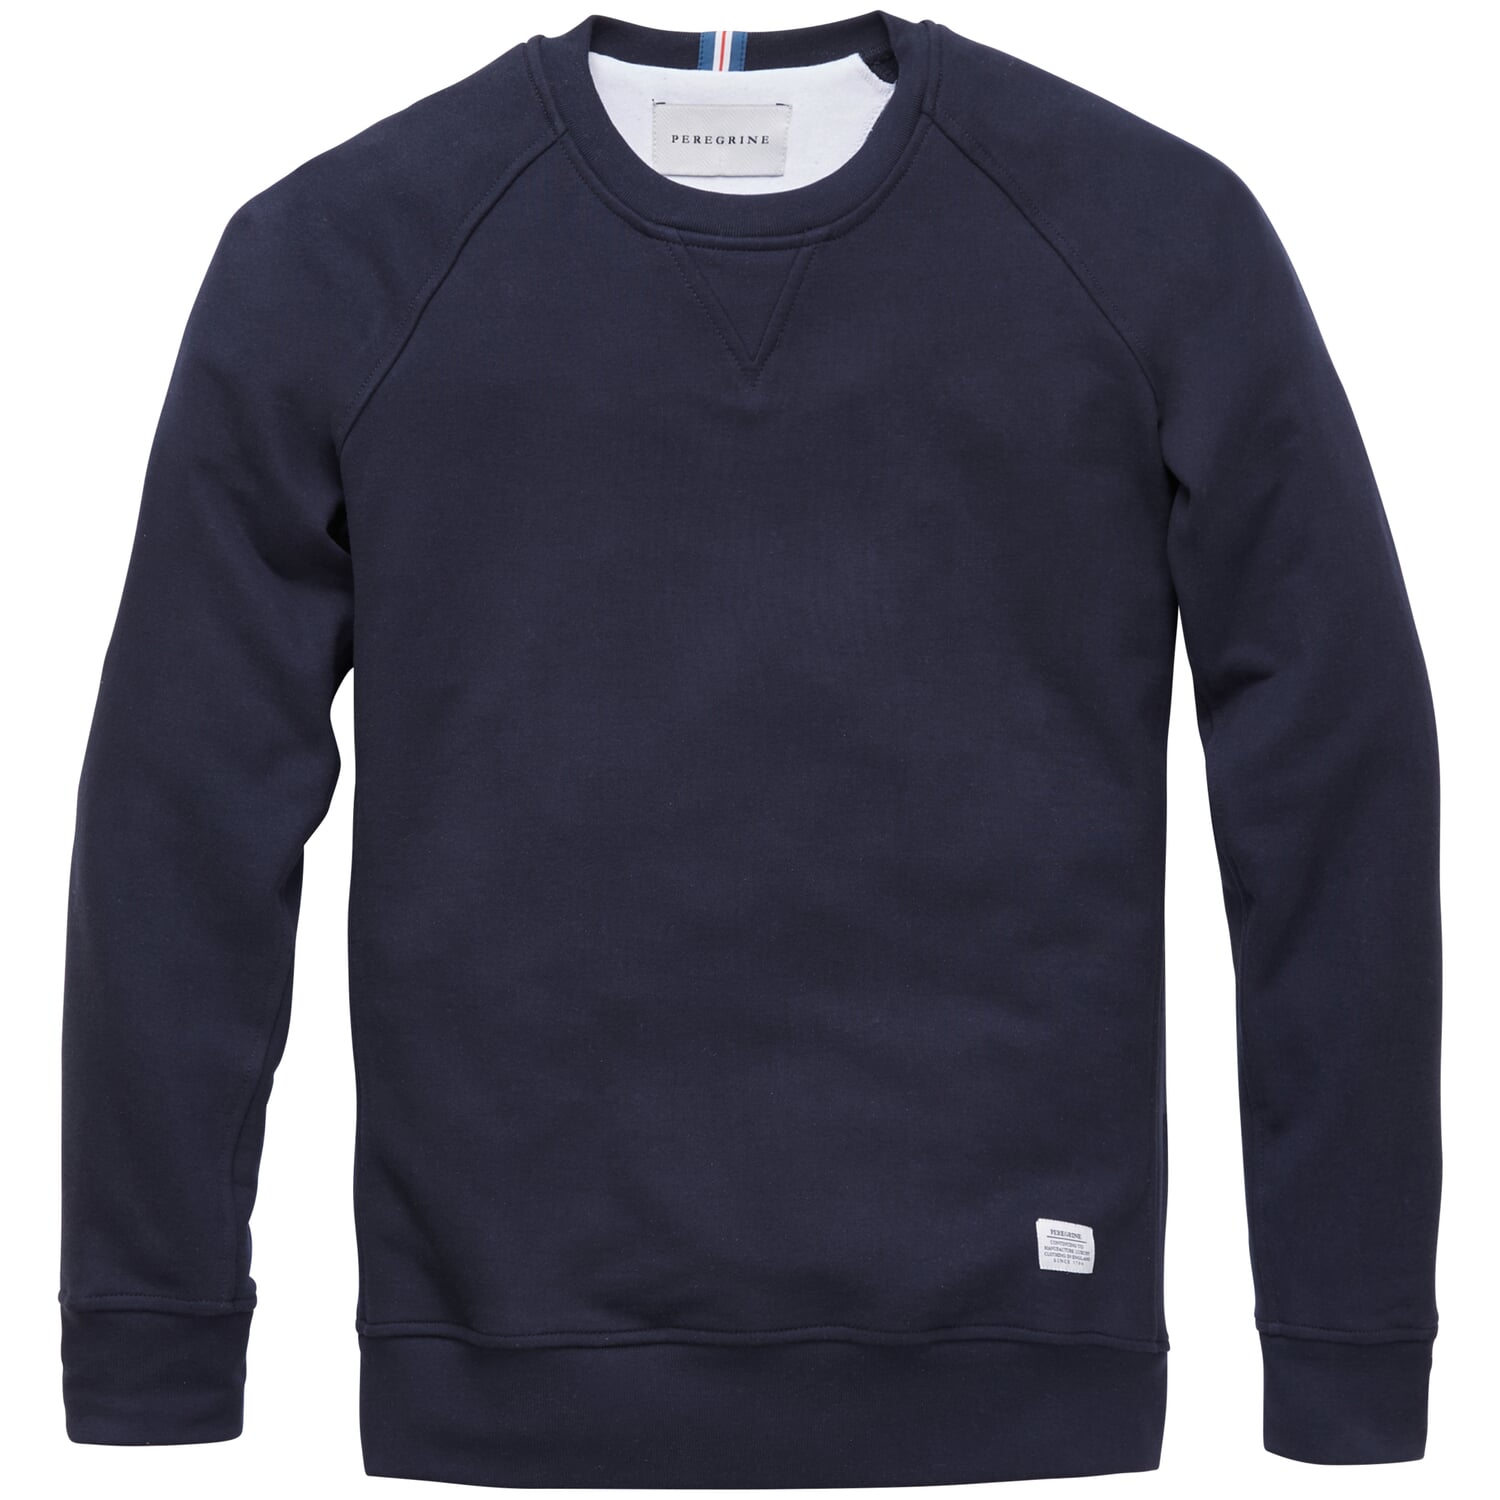 Men sweatshirt raglan, | Dark Manufactum blue